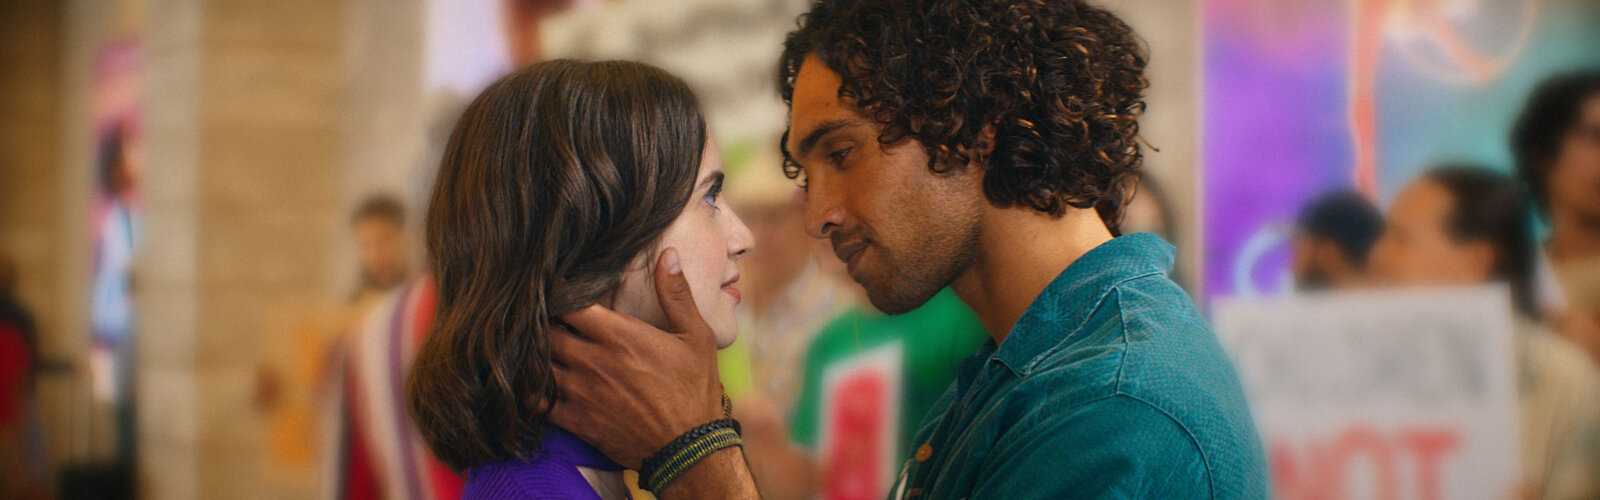 Laura Marano als Cami und Jordi Webber als Jack in der interaktiven Netflix-RomCom Choose Love.